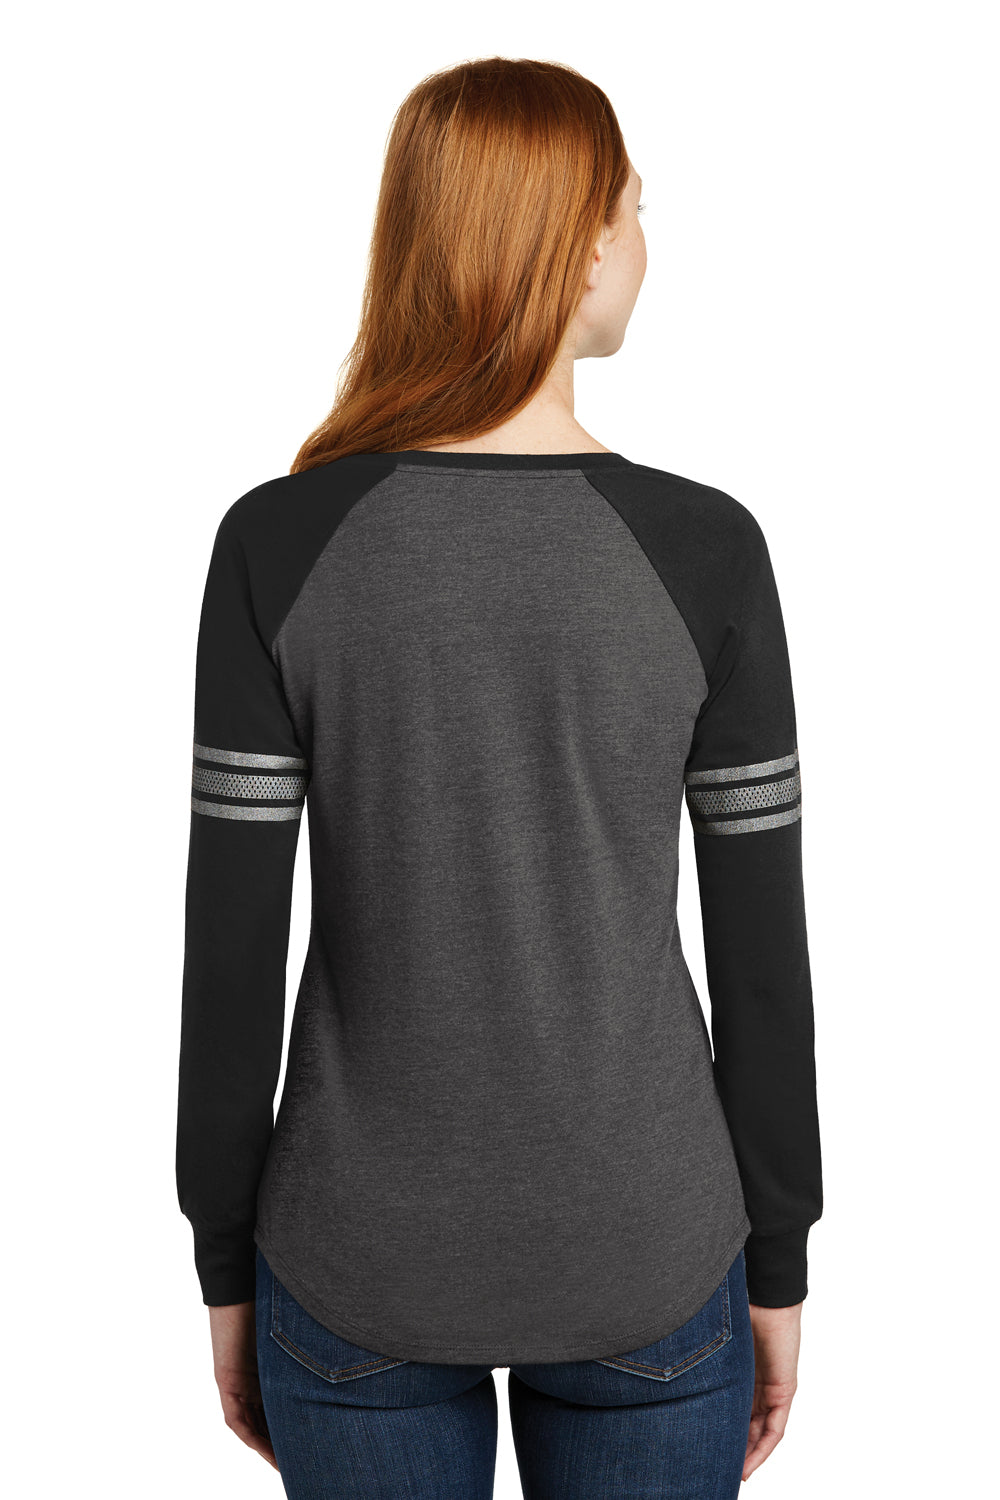 District DM477 Womens Game Long Sleeve V-Neck T-Shirt Heather Charcoal Grey/Black/Silver Grey Back